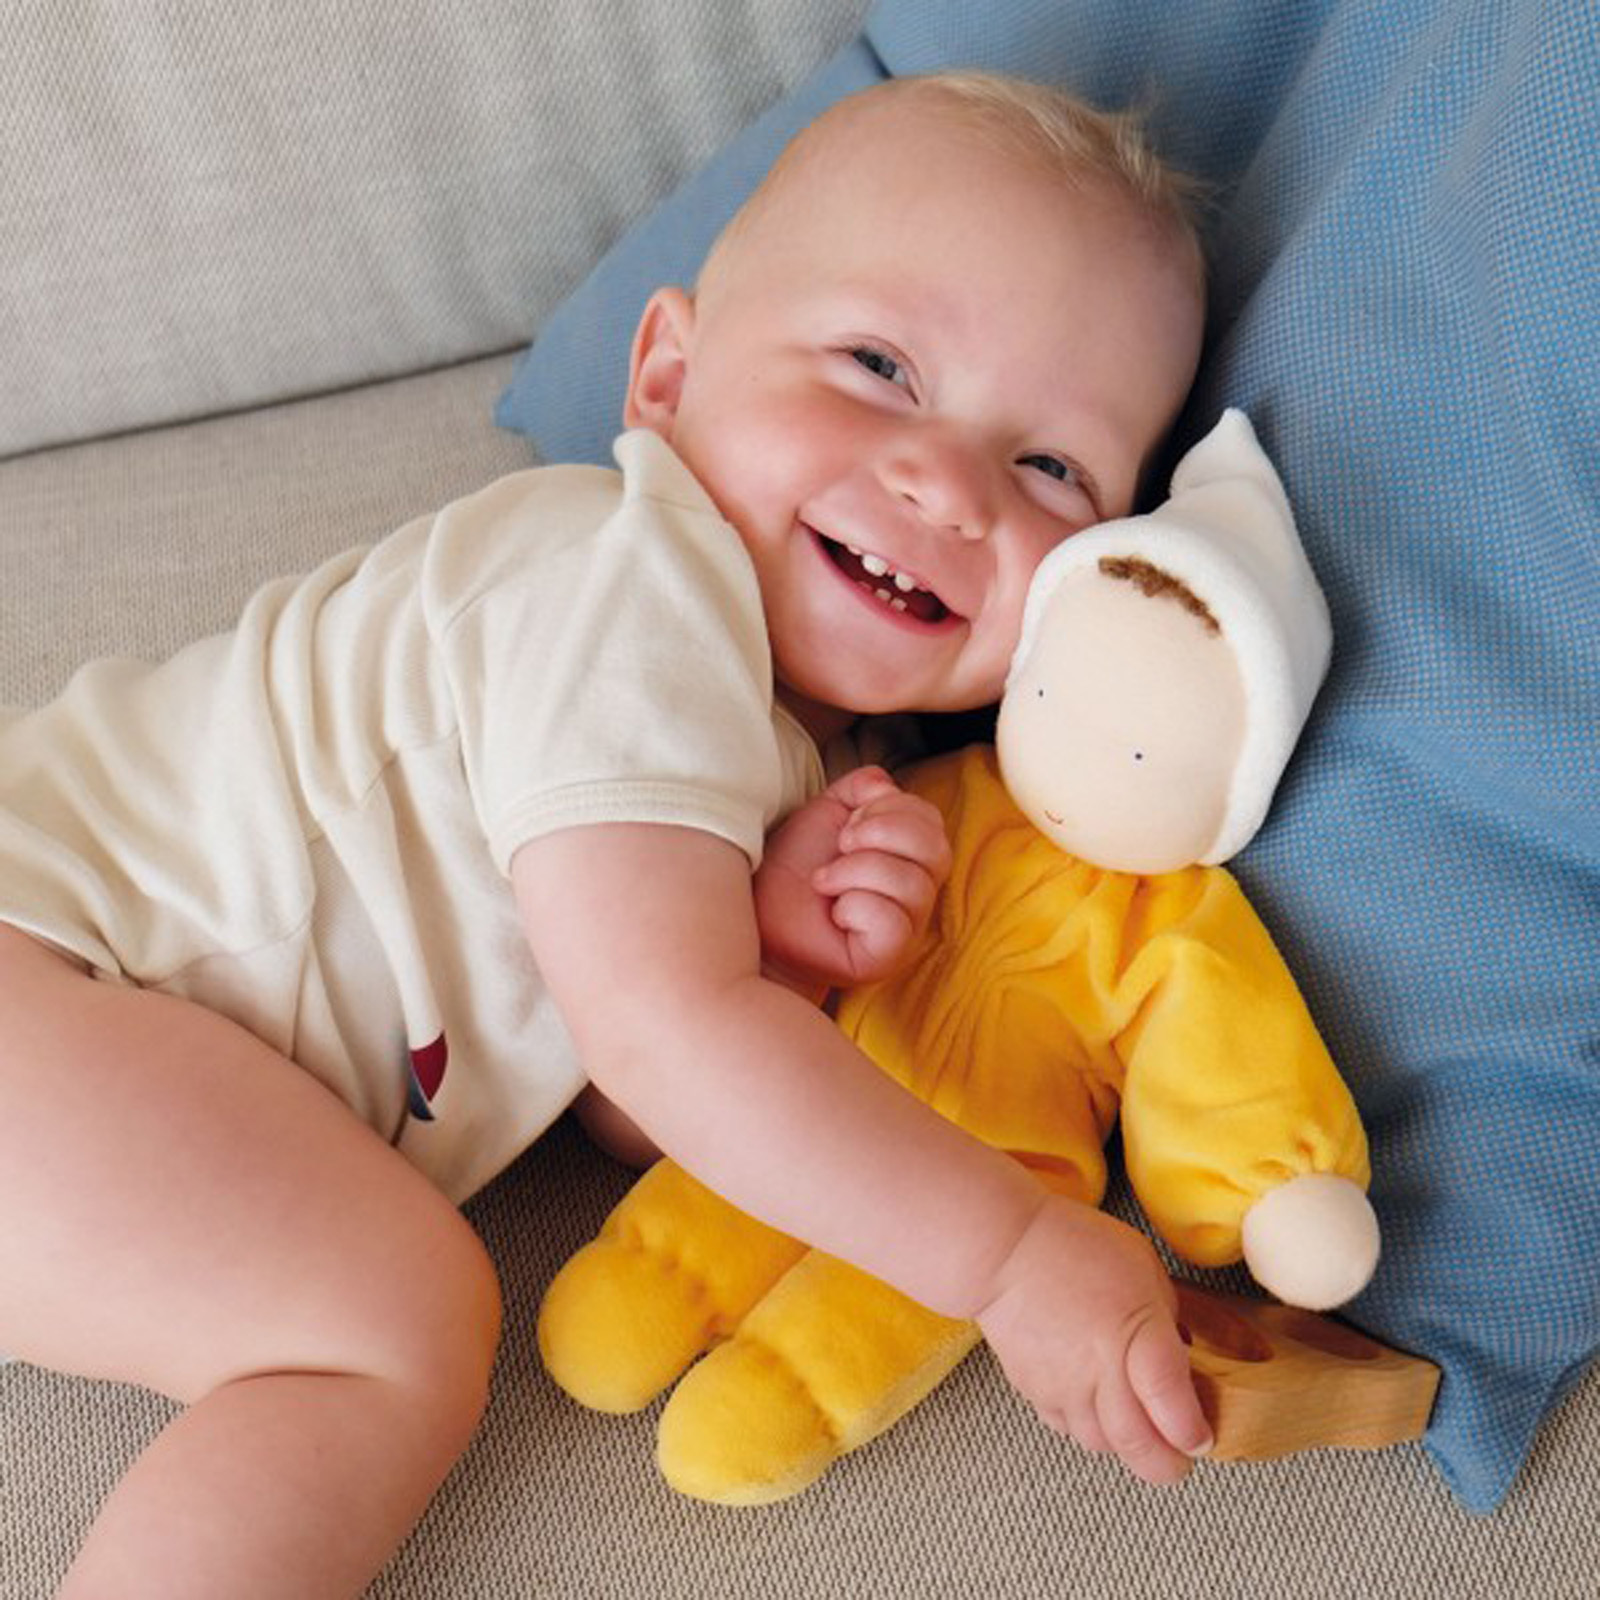 Малыш желтый. Малыш в желтом игрушка. Младенец в желтом. Игрущка ребёнок в жёлтом.